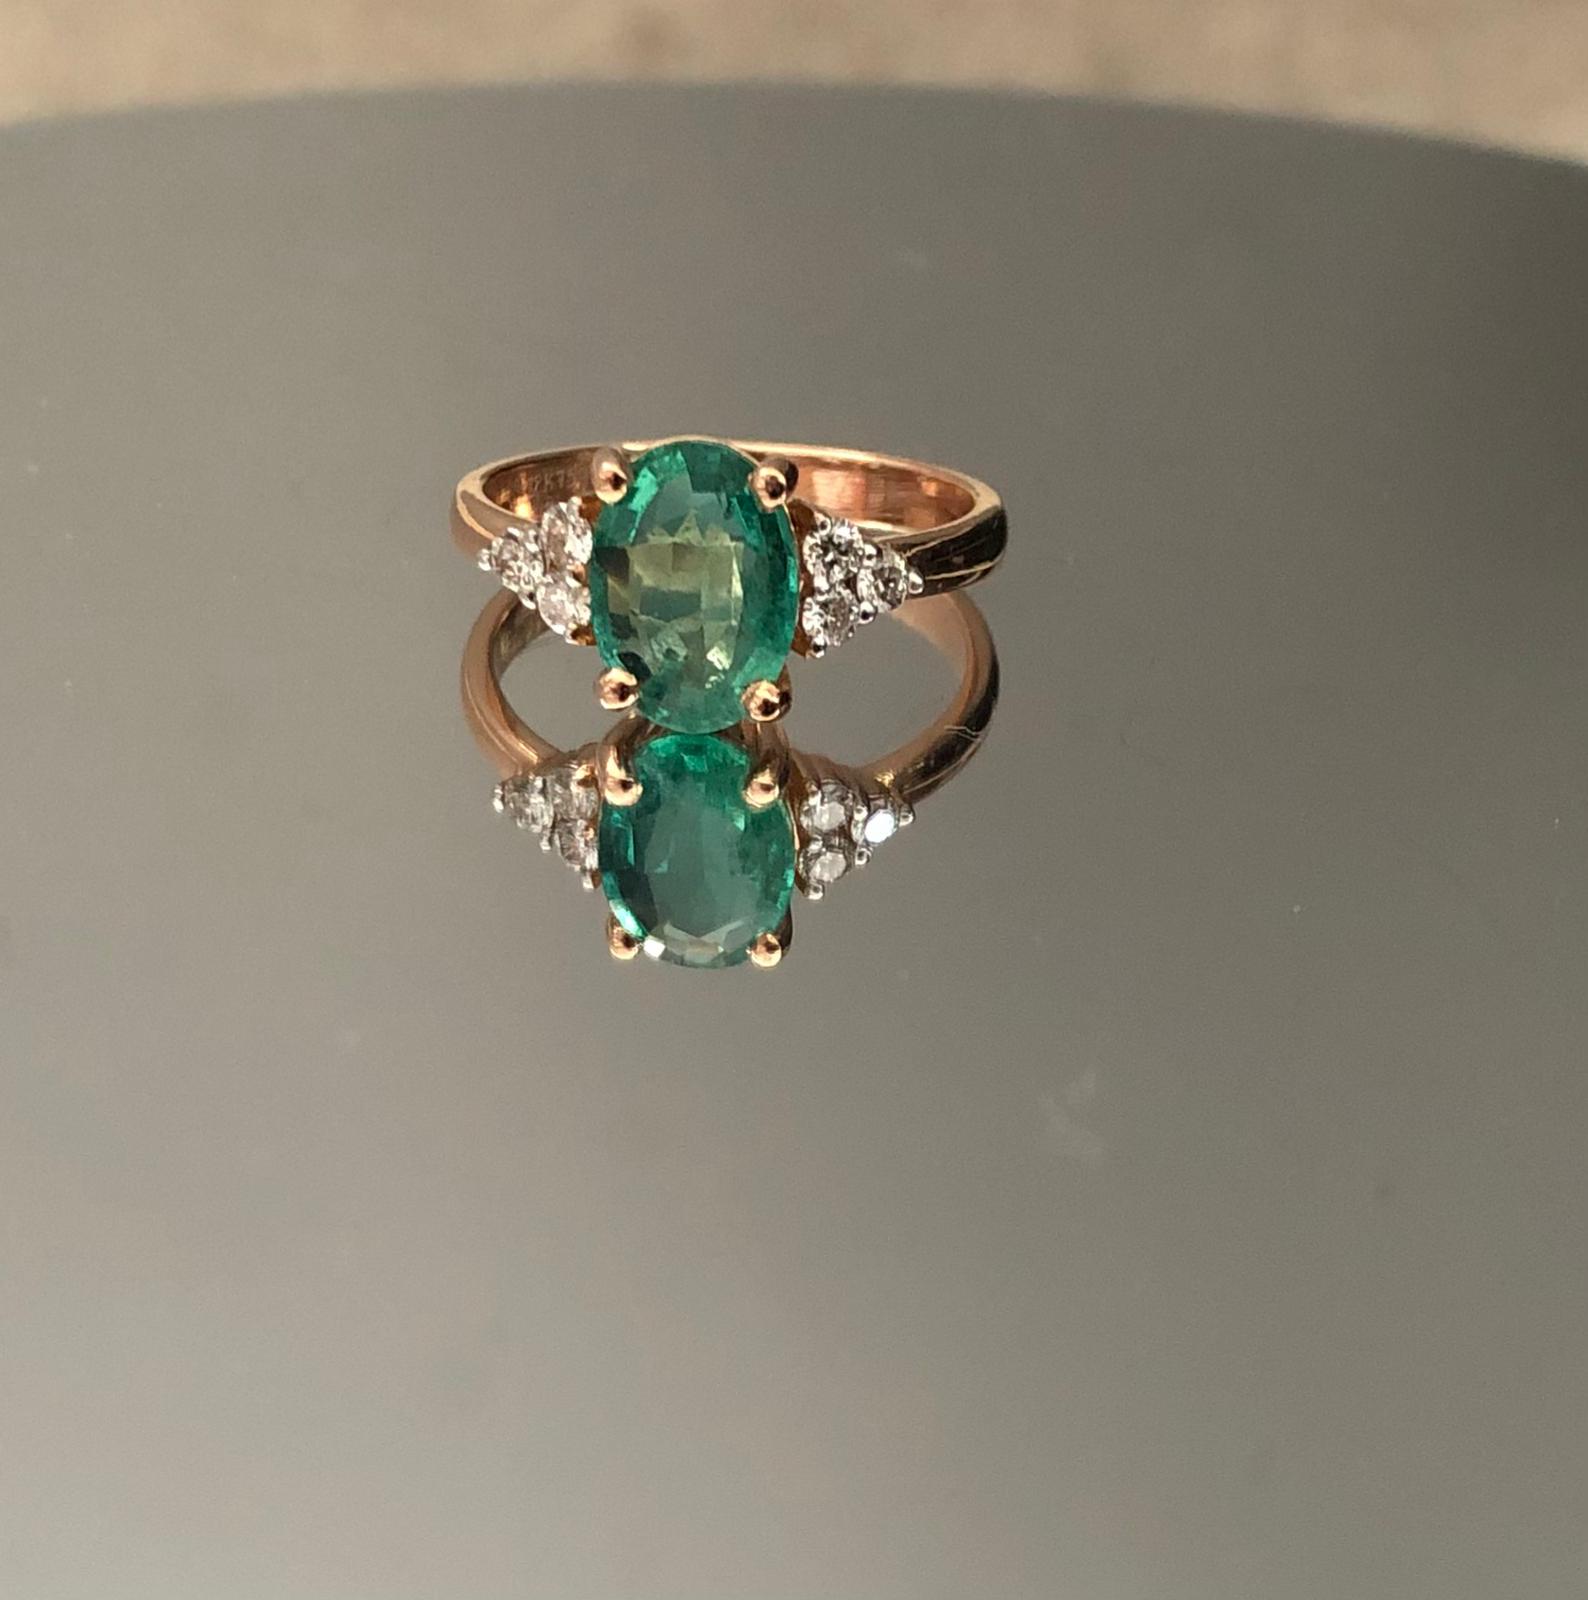 Beautiful 1.83 Carat Natural Emerald Ring With Natural Diamonds and 18k Gold - Image 2 of 5